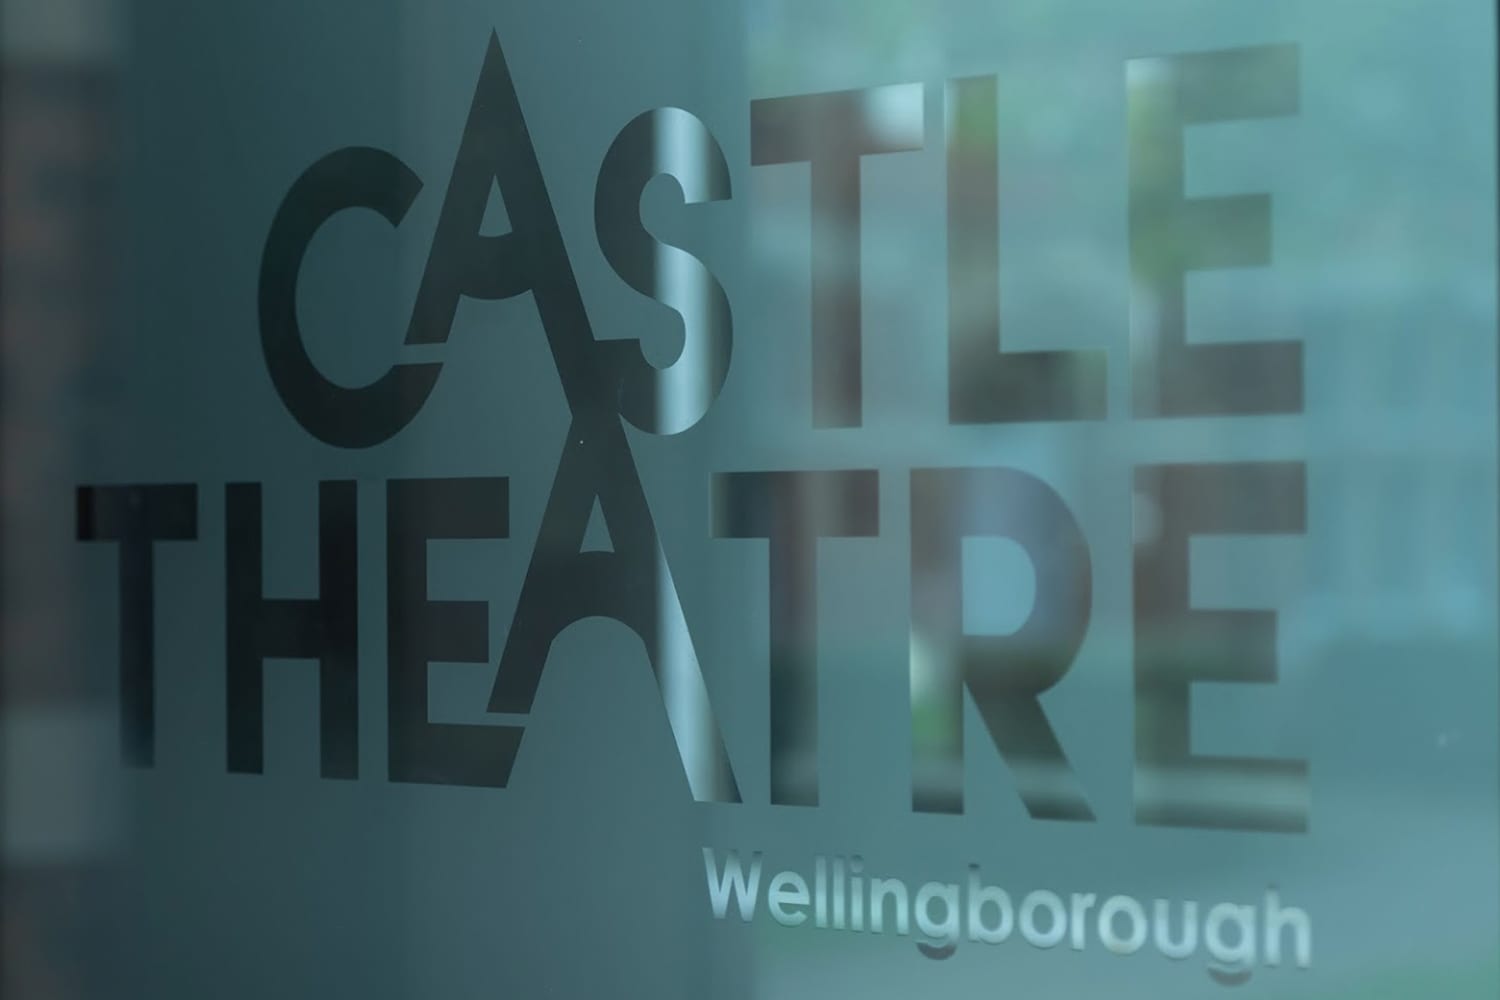 The Castle Wellingborough